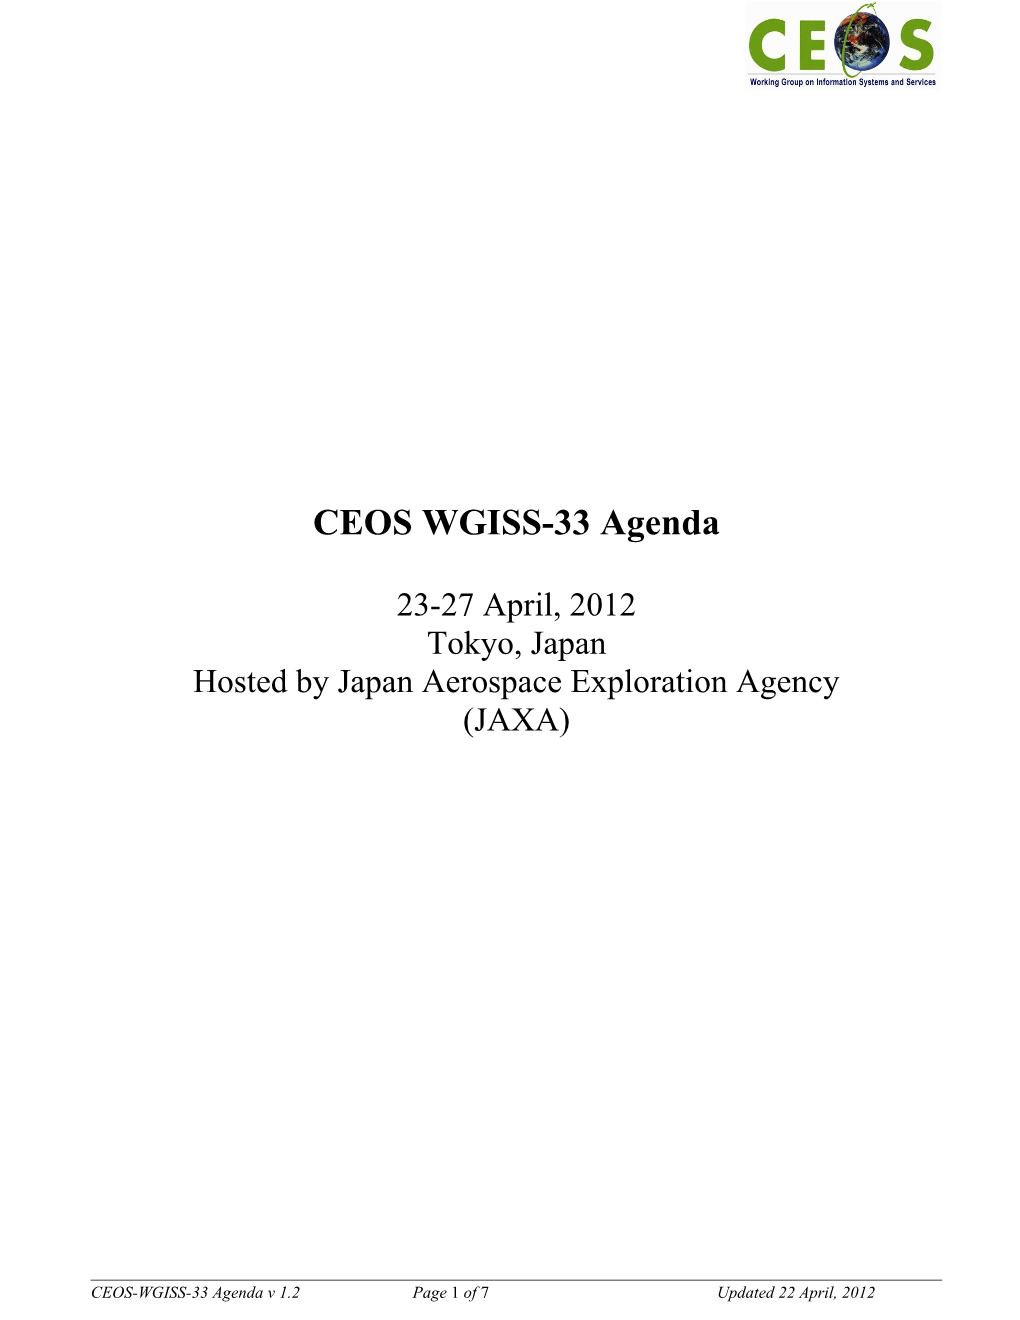 CEOS WGISS-33 Agenda